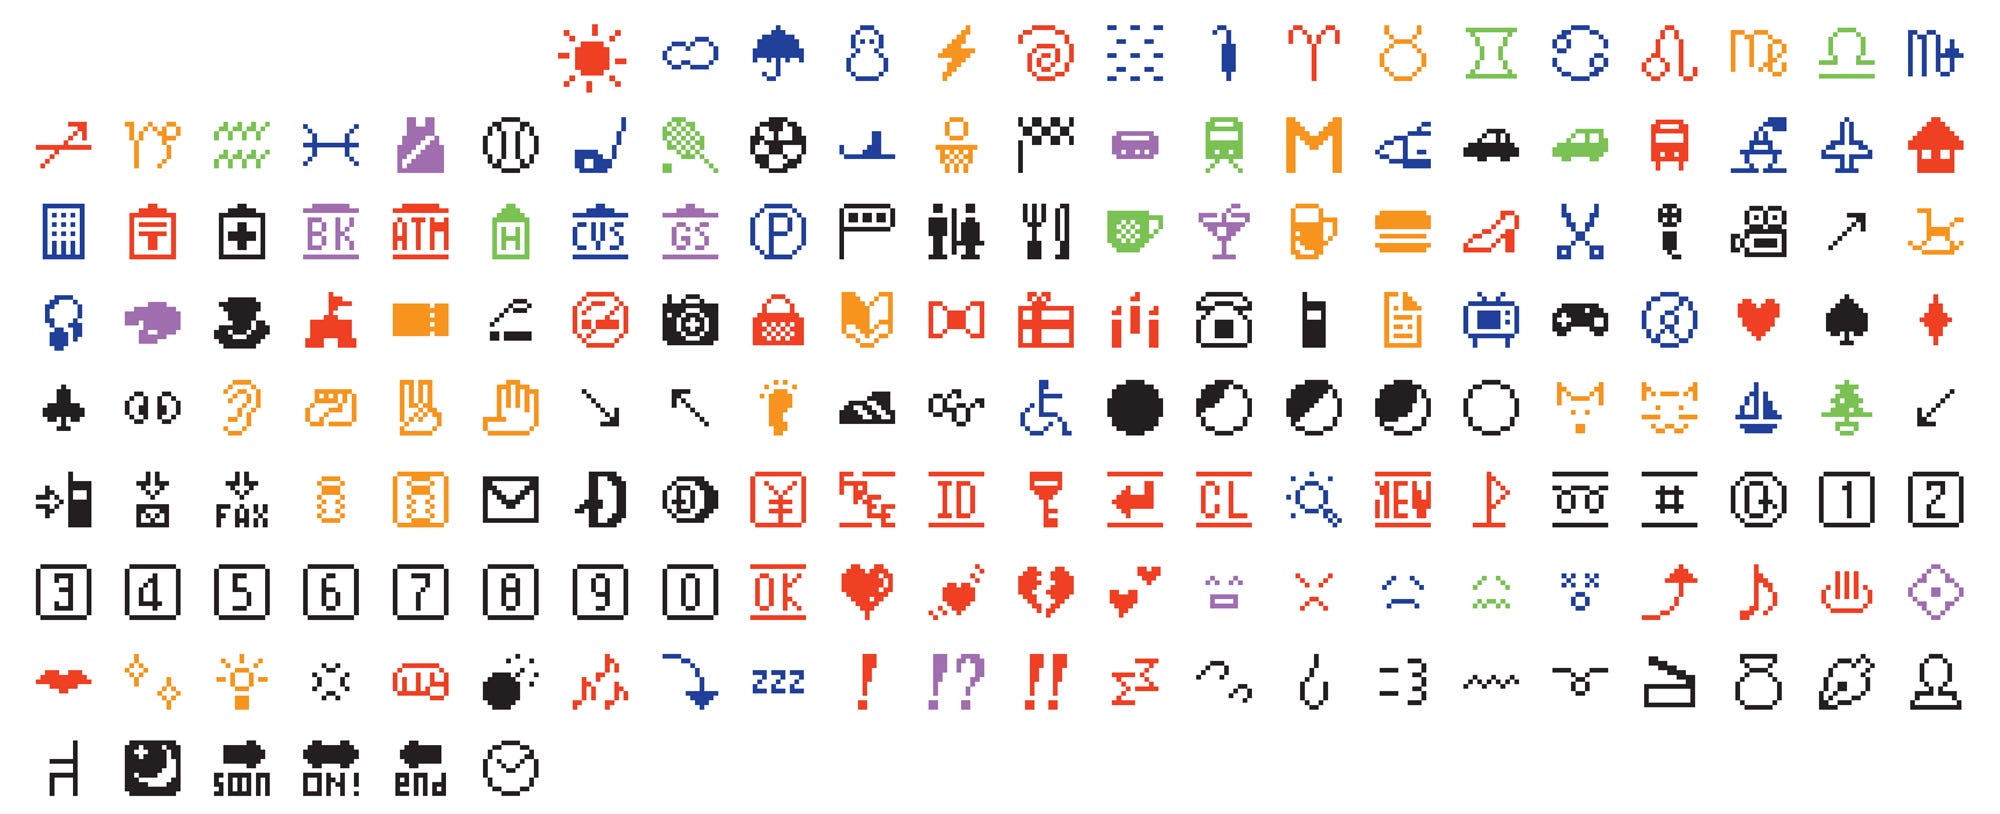 different emojis